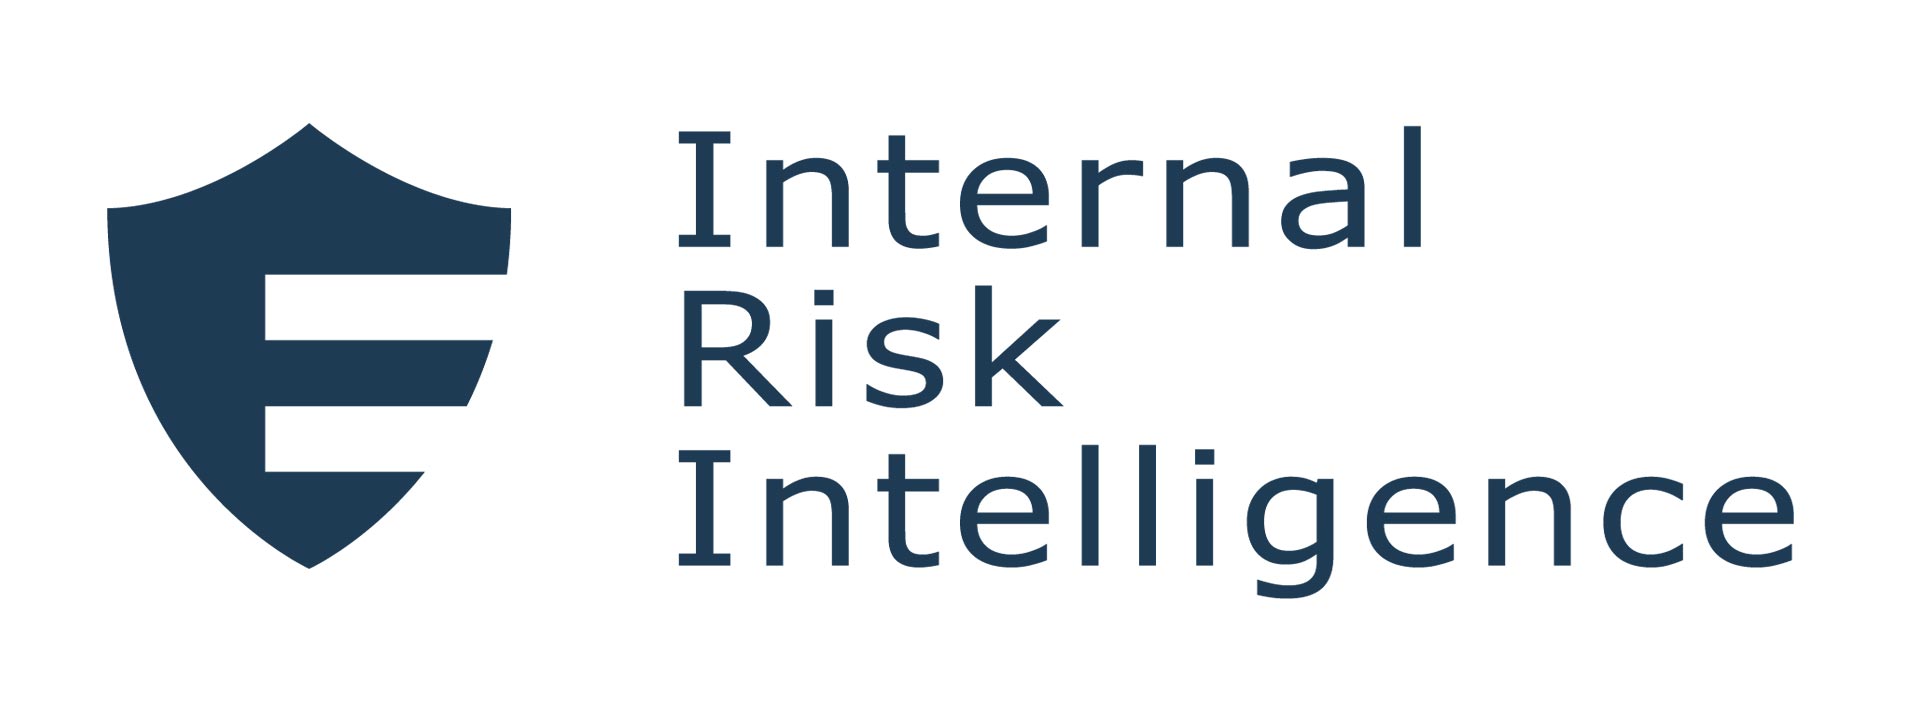 Internal Risk Intelligence